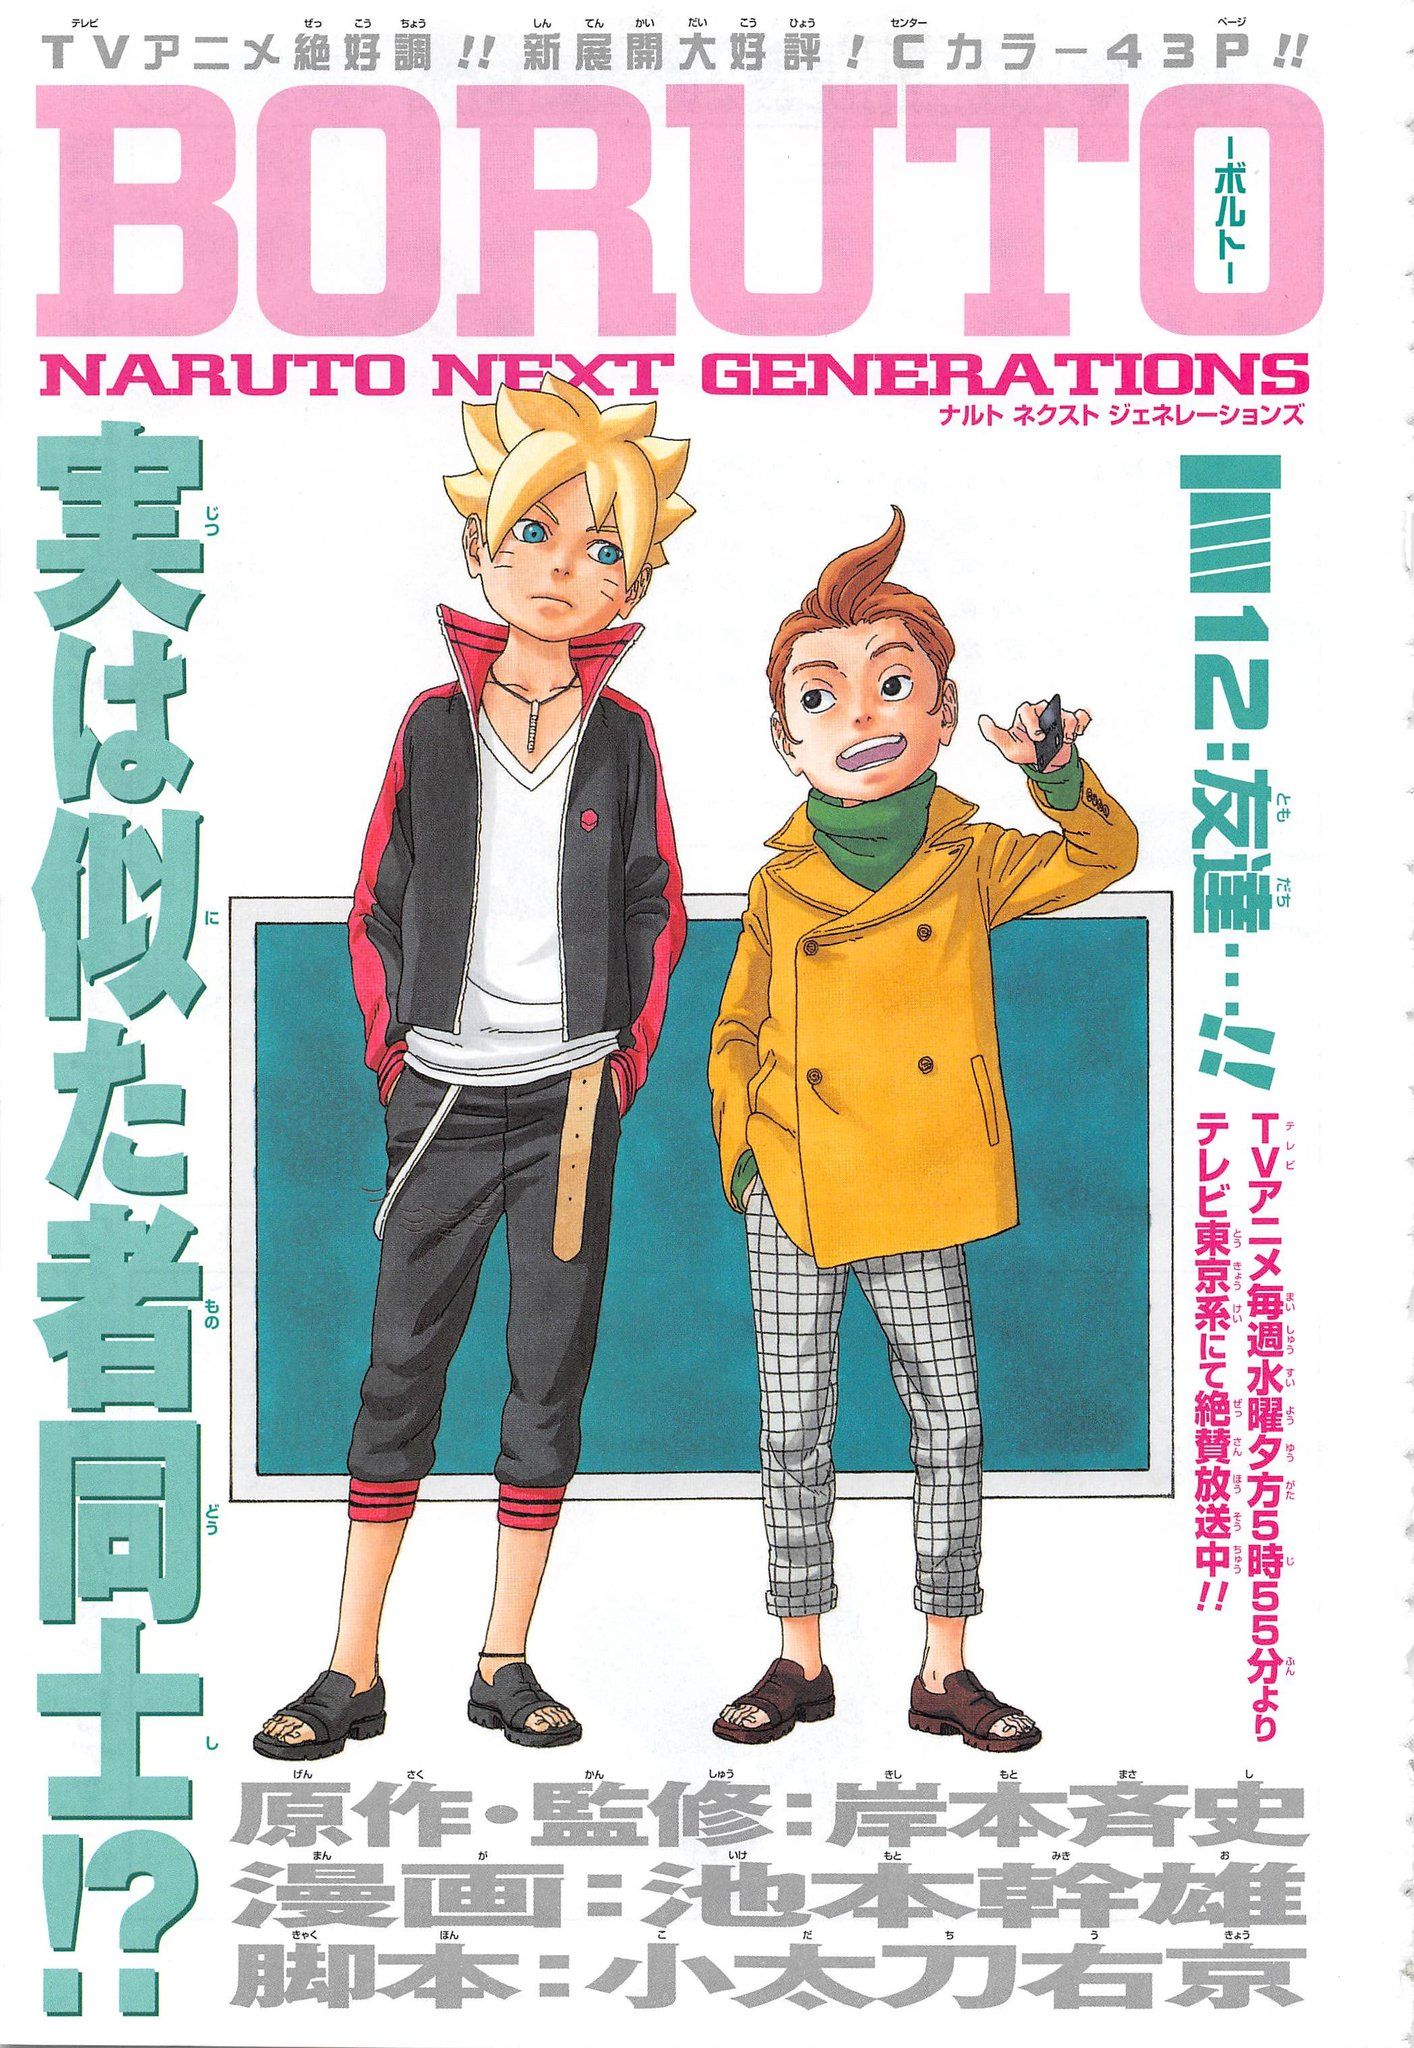 Boruto: Naruto Next Generations, Vol. 12 (12)